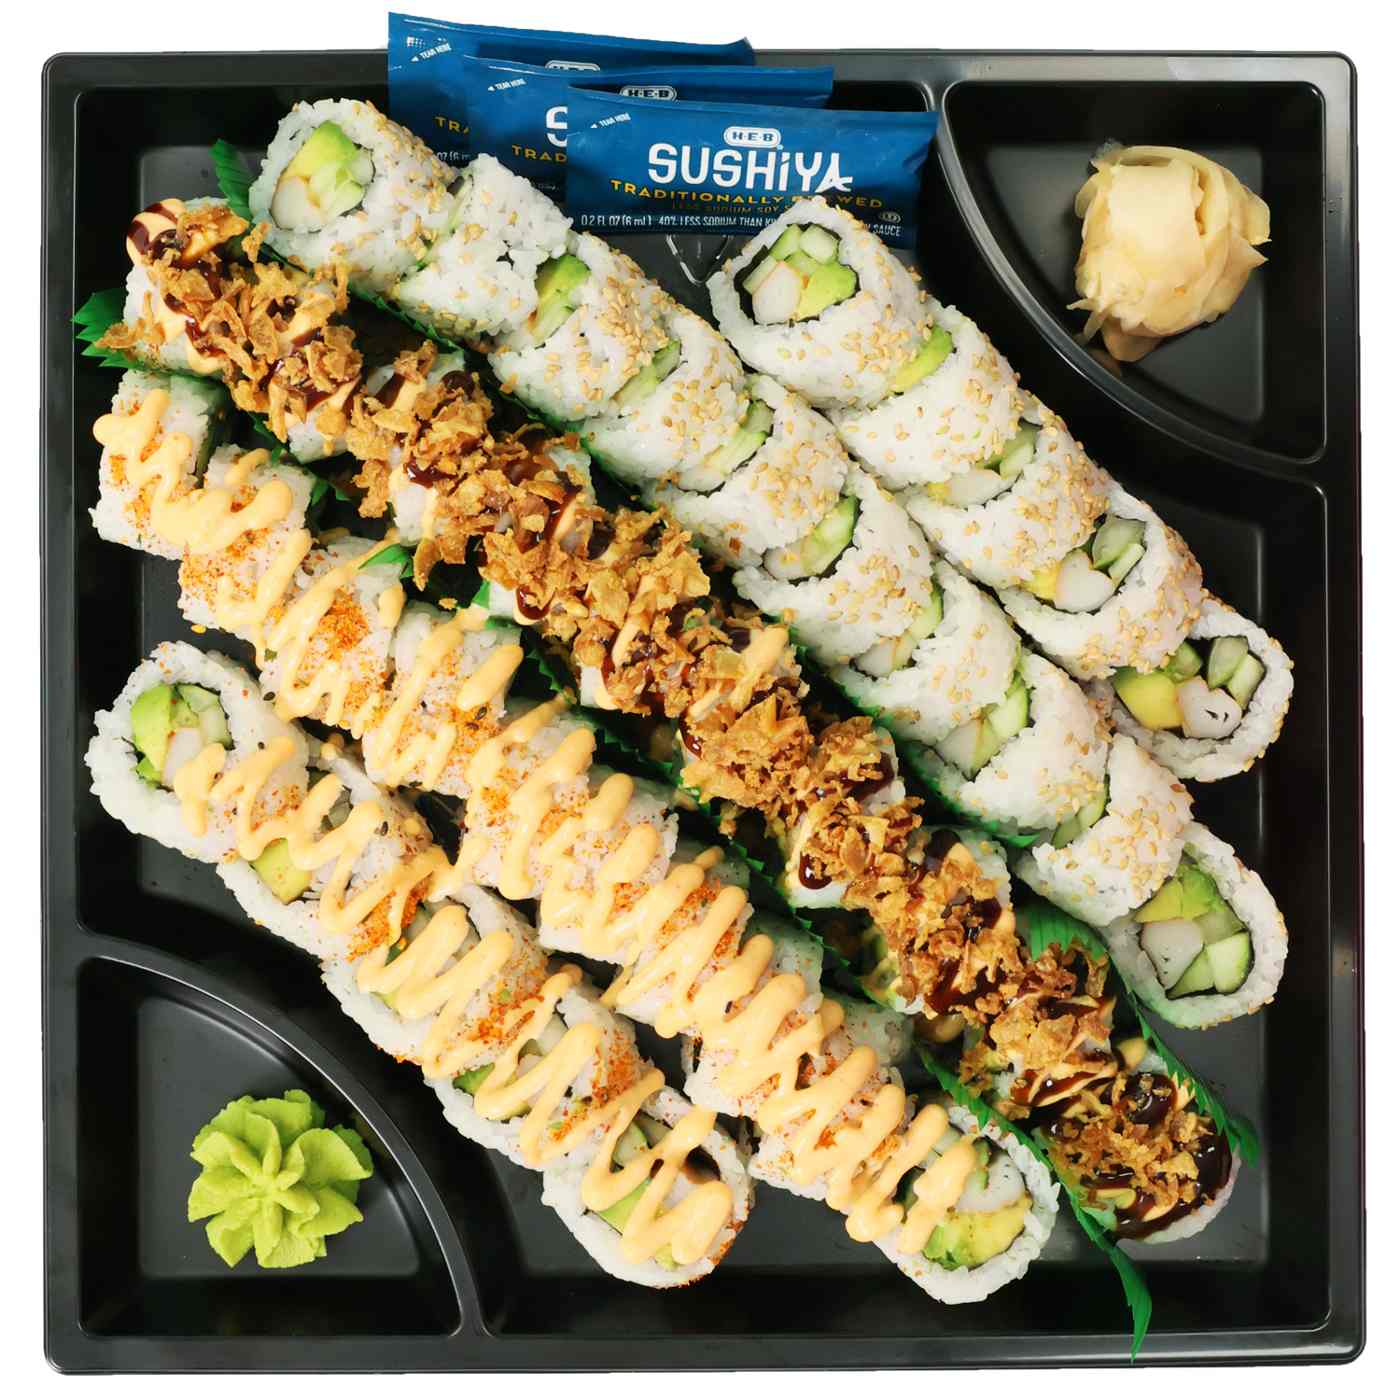 H-E-B Sushiya Sushi Party Tray - California Roll; image 1 of 3